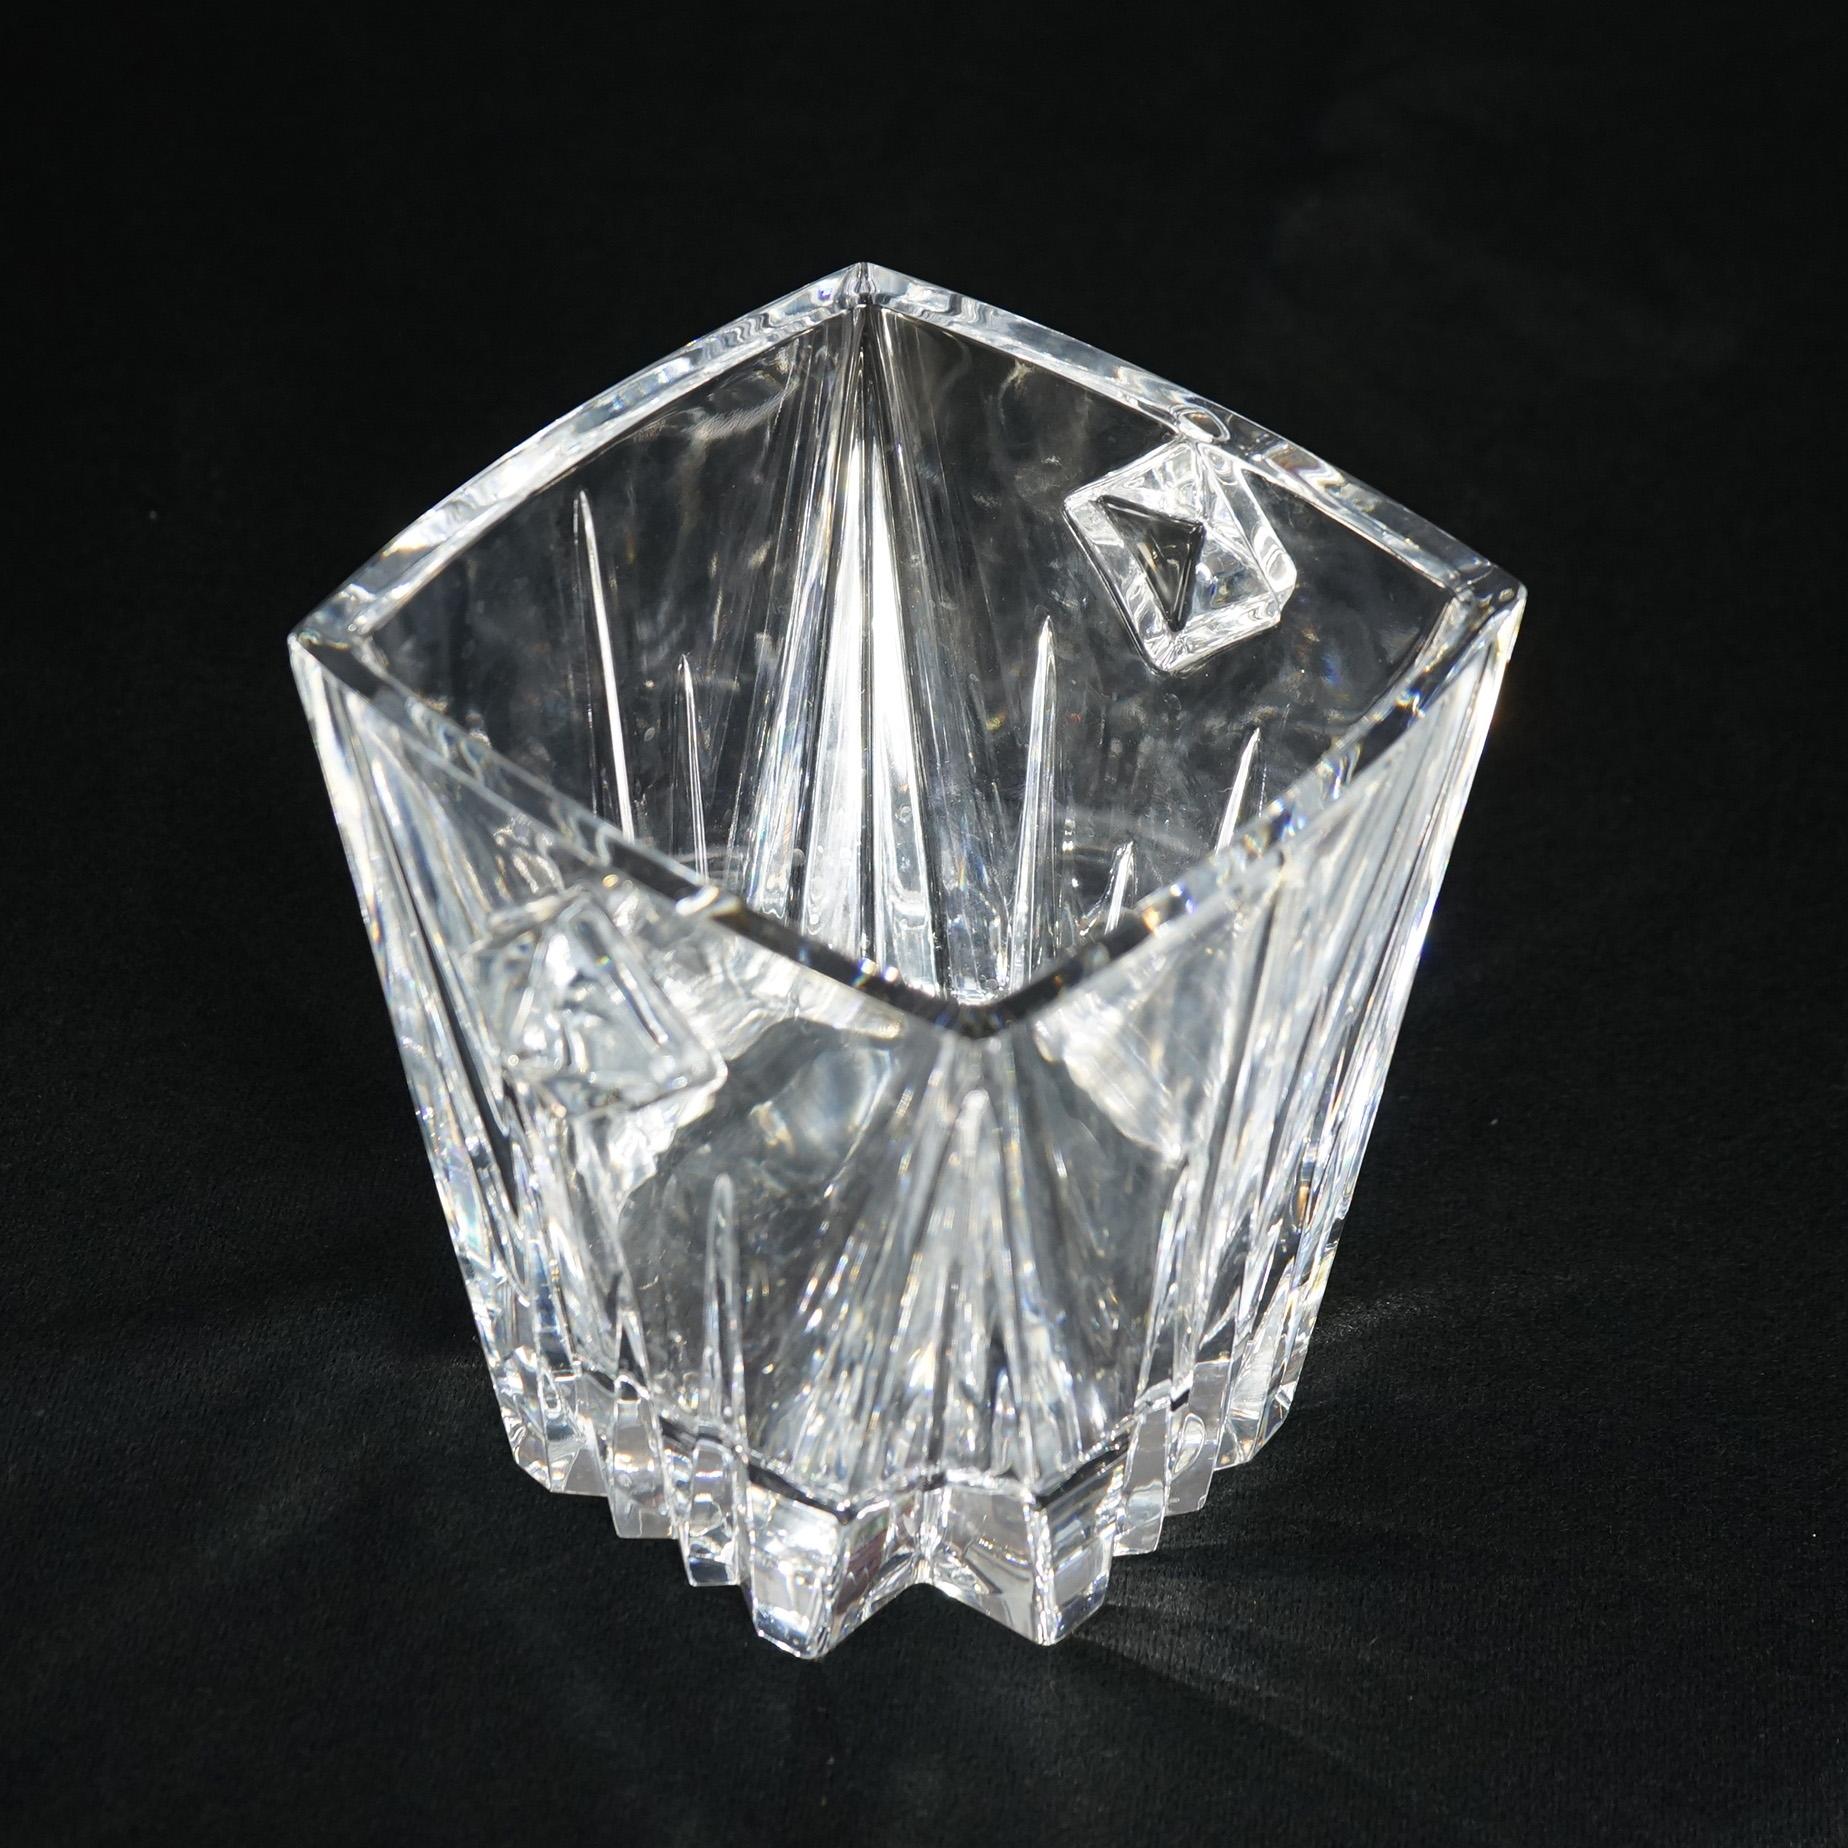 Lenox Ovations Crystal Double Handled Ice Bucket 20thC

Measures- 7.5''H x 8''W x 6.75''D